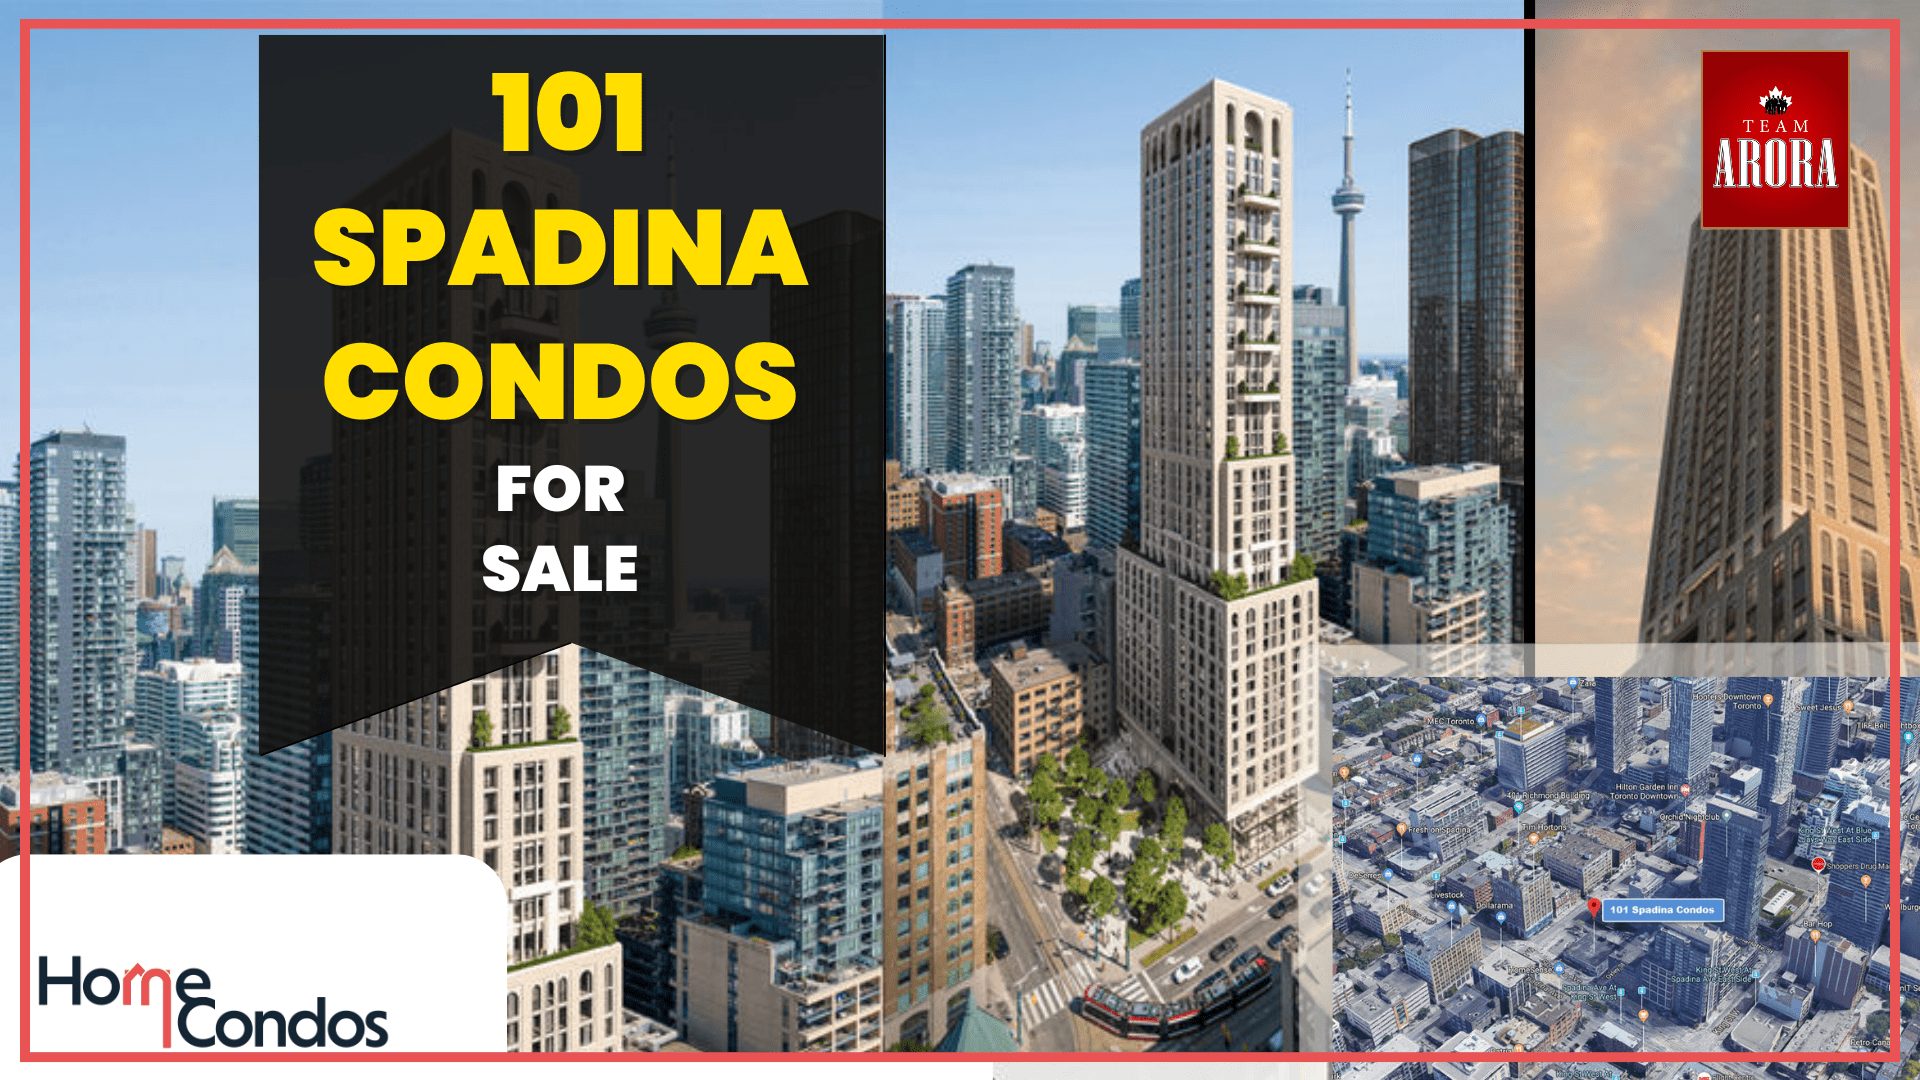 101 Spadina Condos for Sale: Luxury Meets Location in Toronto’s Heart